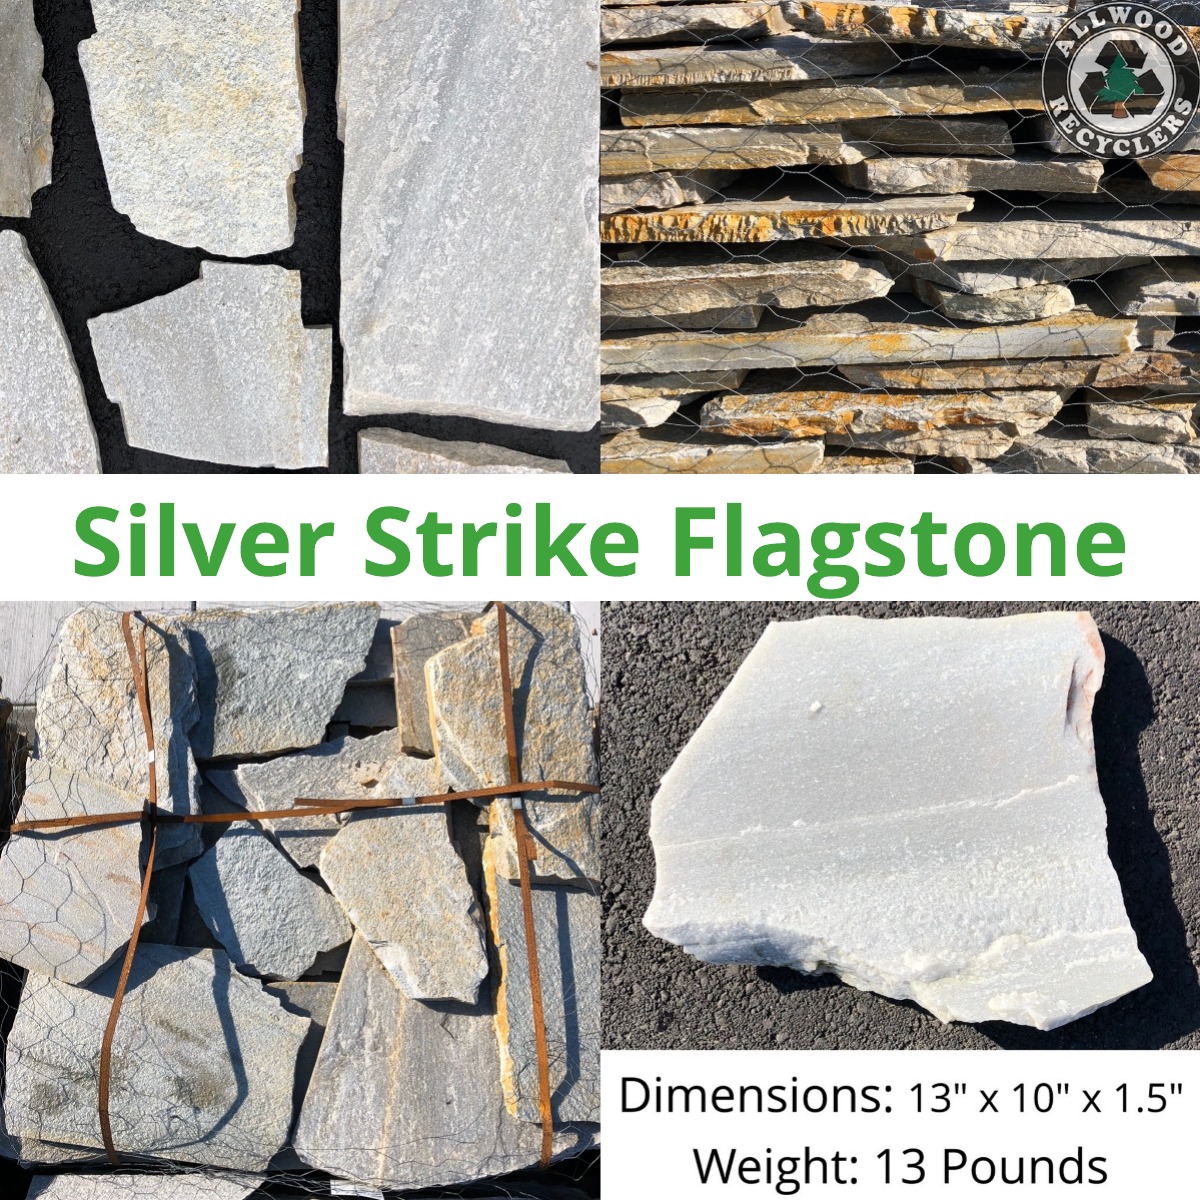 Silver Strike Flagstone